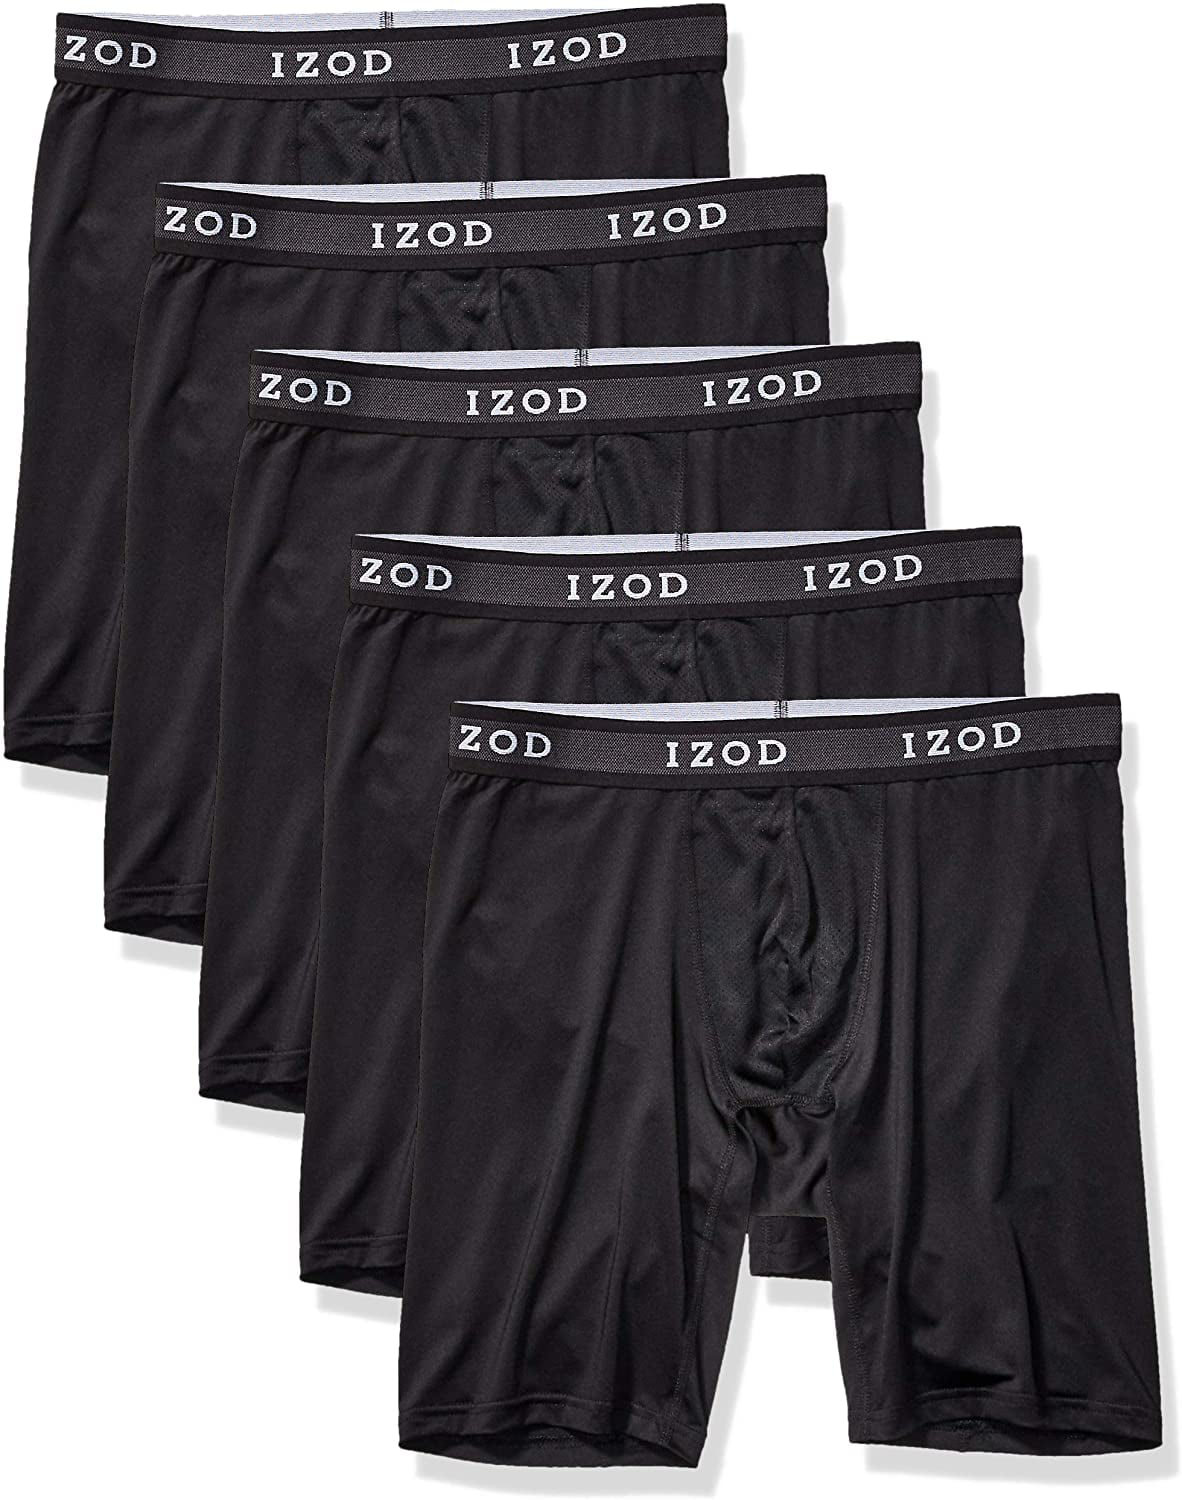 IZOD Men's 5 Pack Performance Long Leg Boxer Briefs, Black, Small